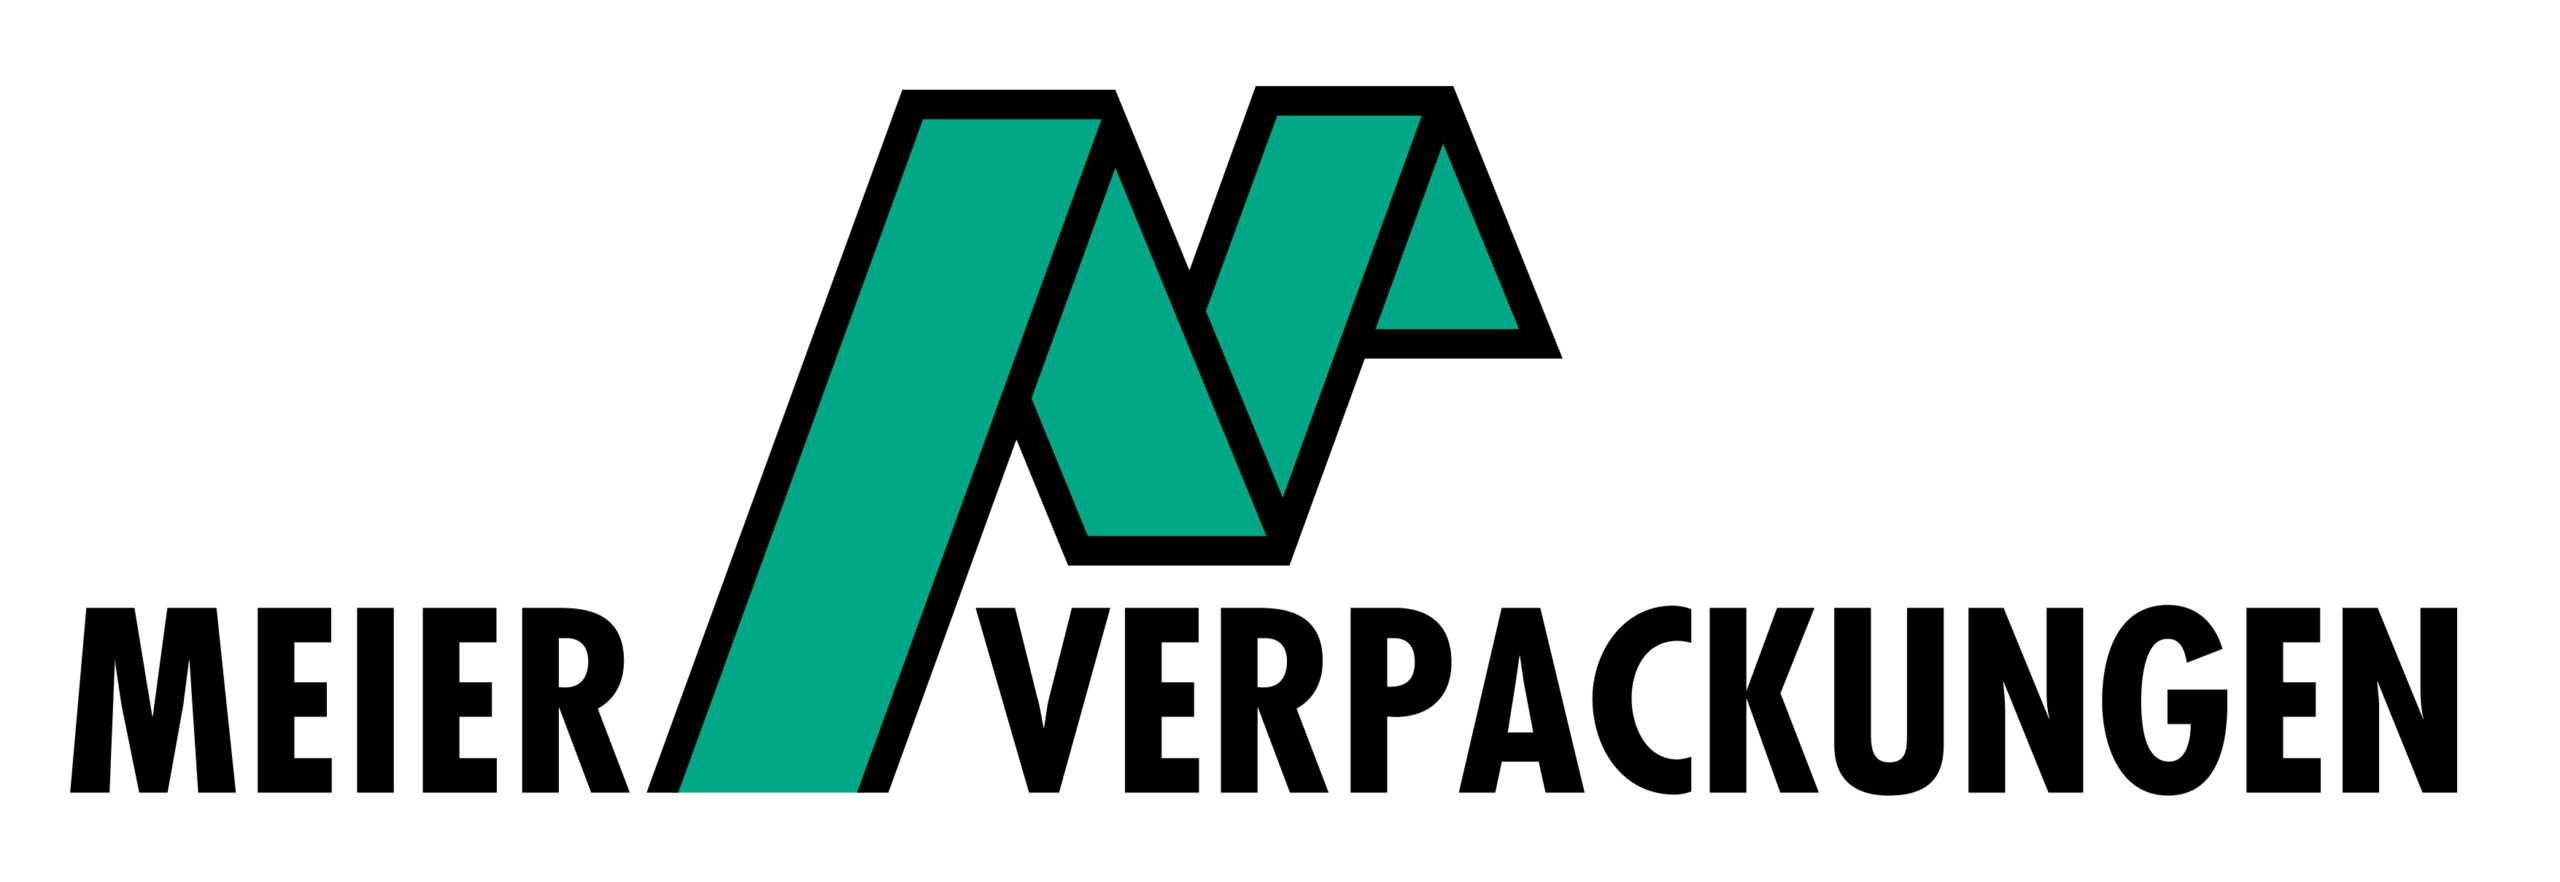 Meier_Verpackungen_Logo